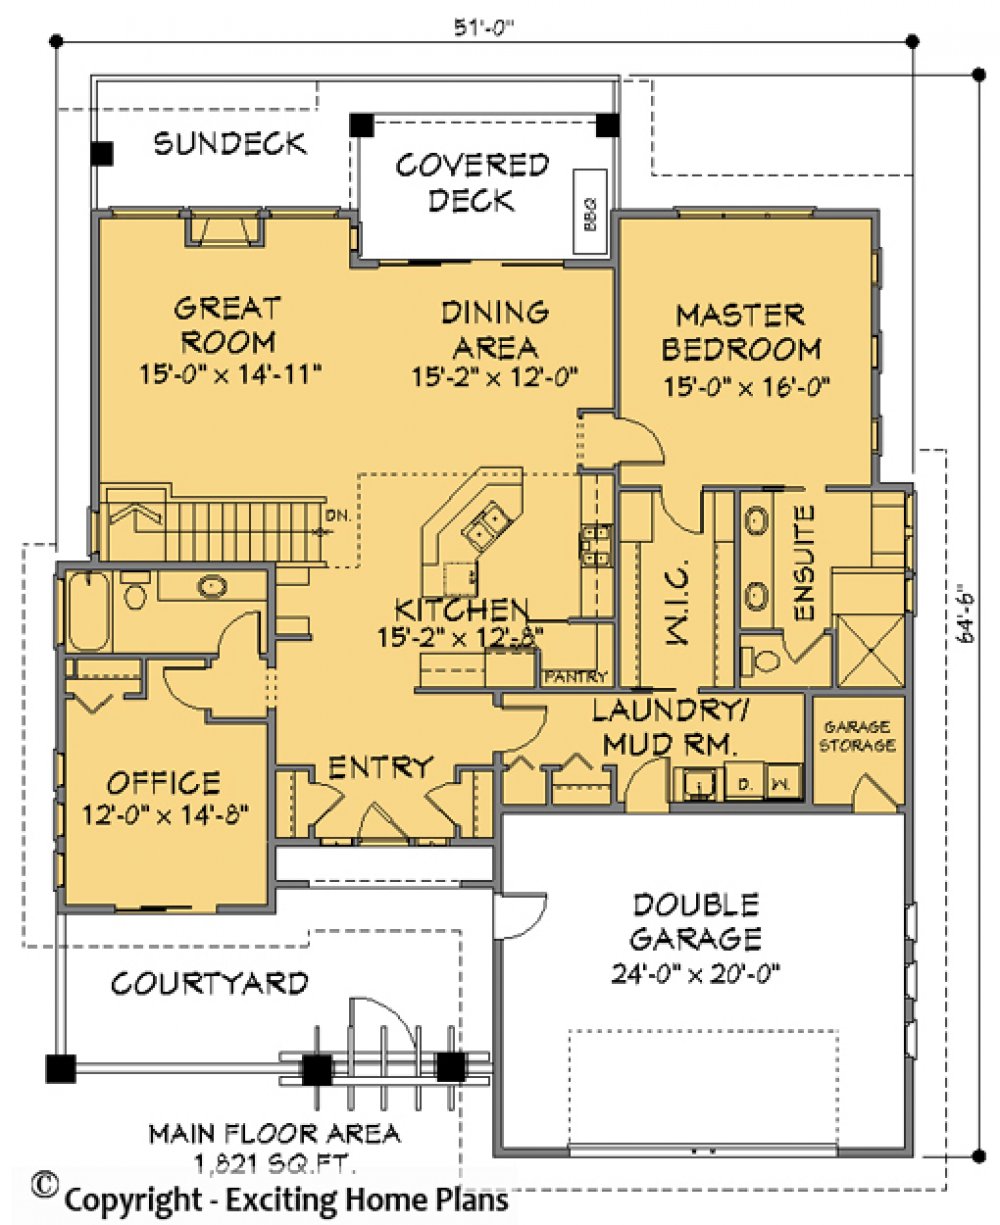 House Plan E1173-10  Main Floor Plan